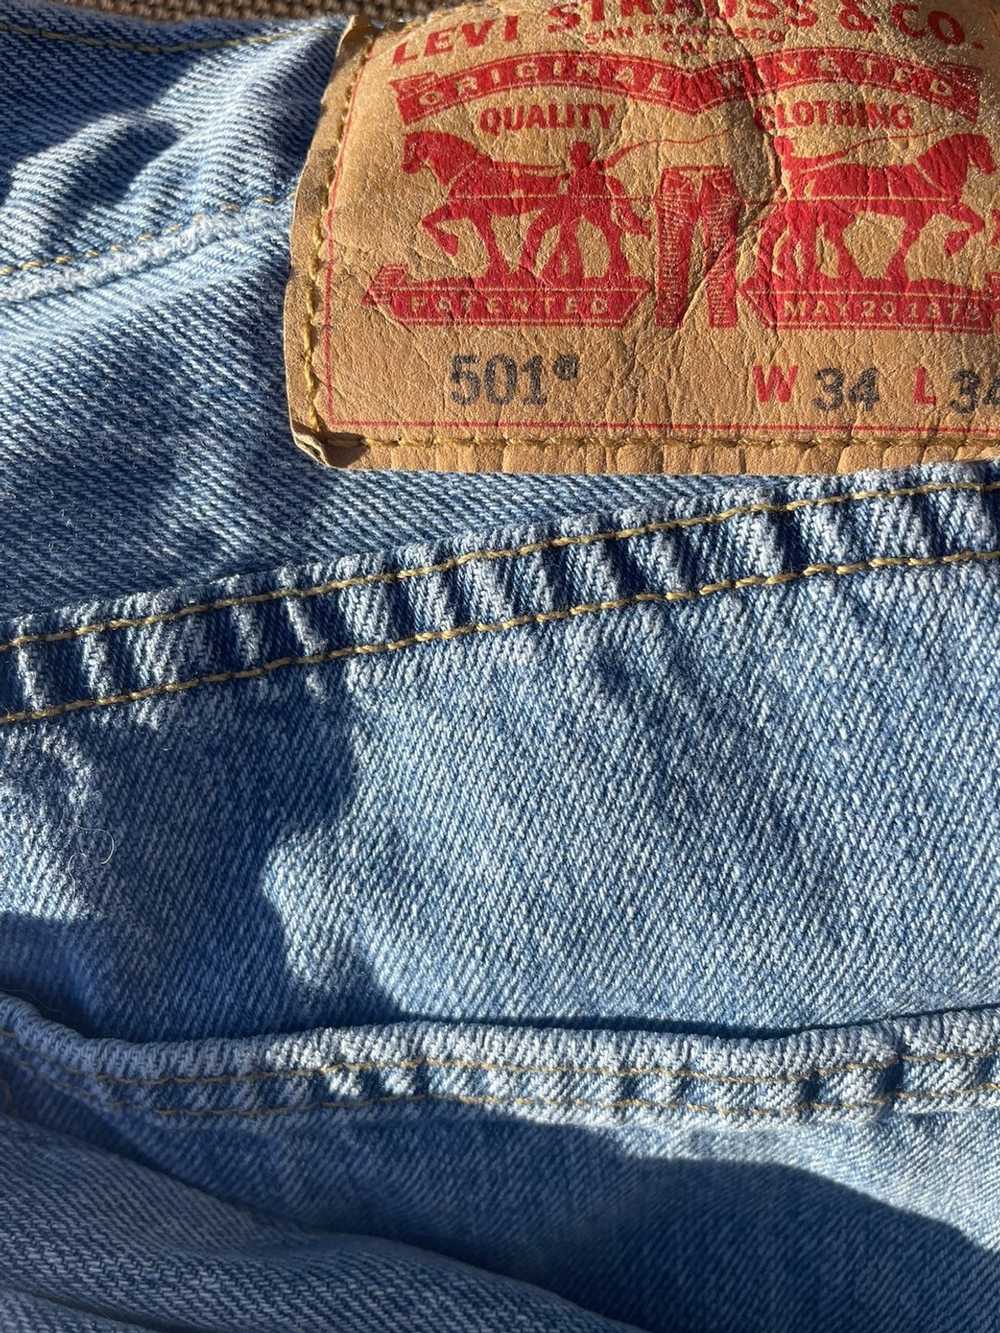 Levi's Levi’s 501 denim jeans - image 2